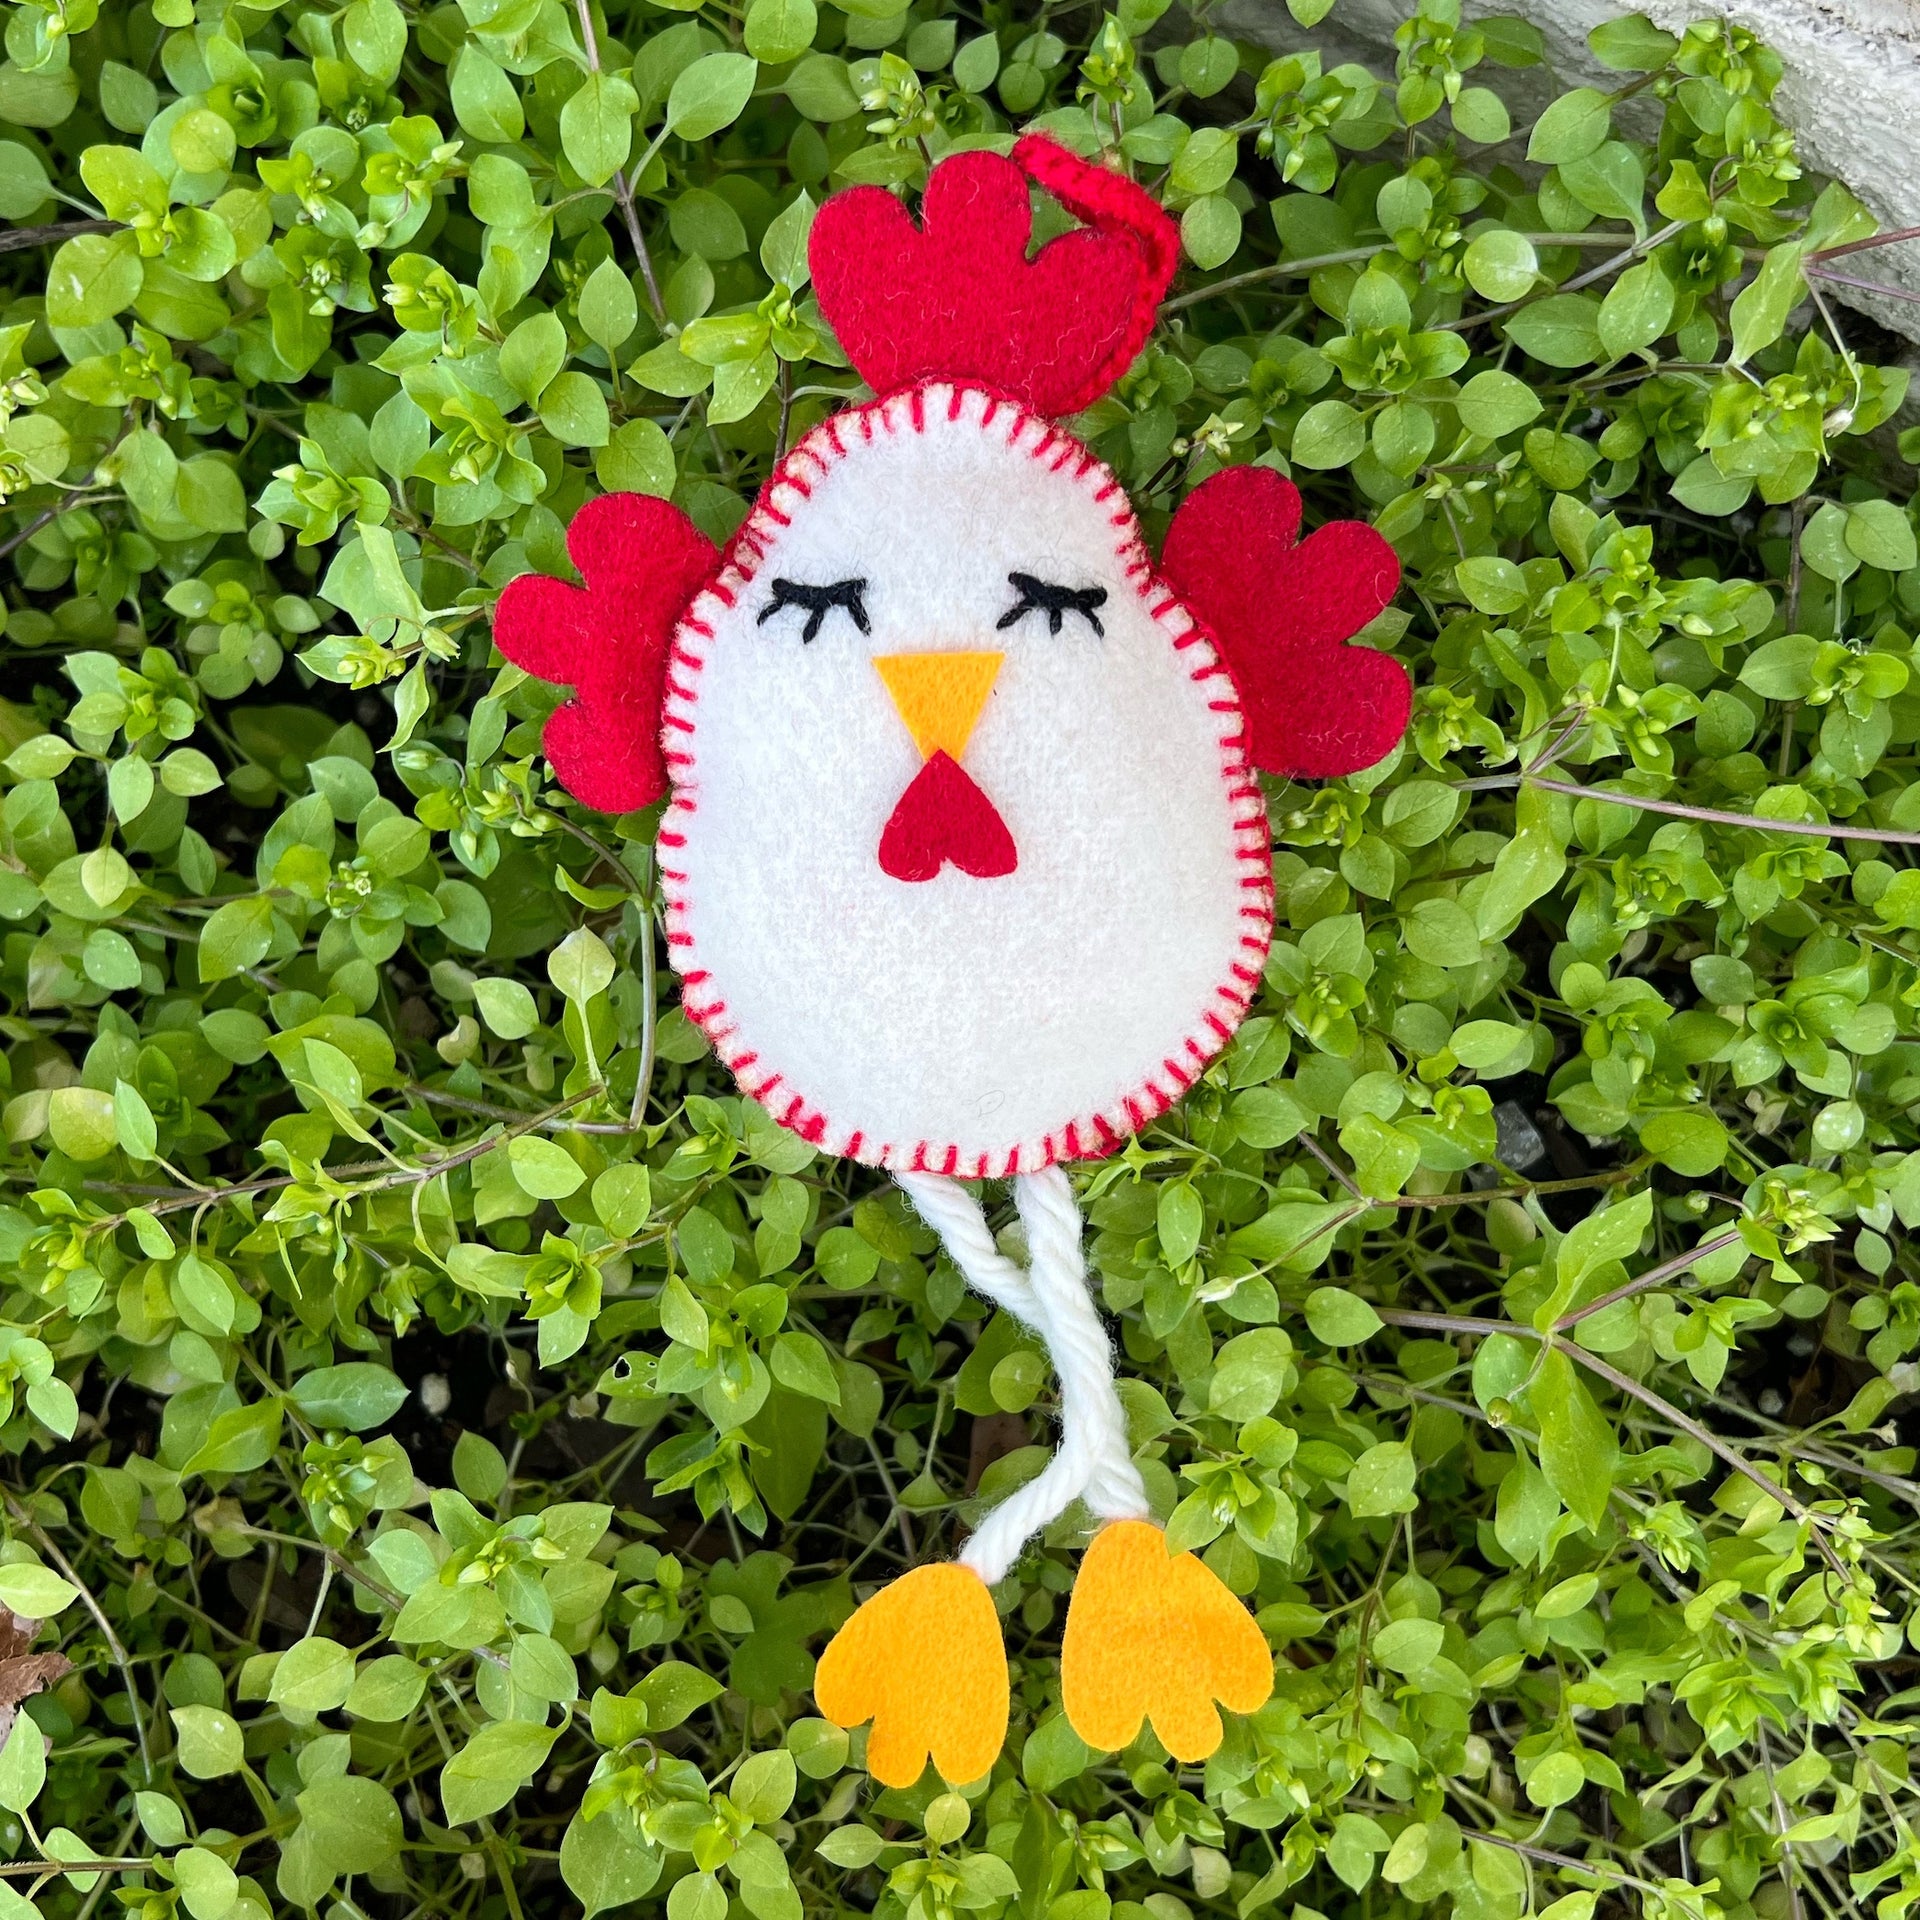 Handmade Chicken Egg Ornament with dangle legs outside on grass